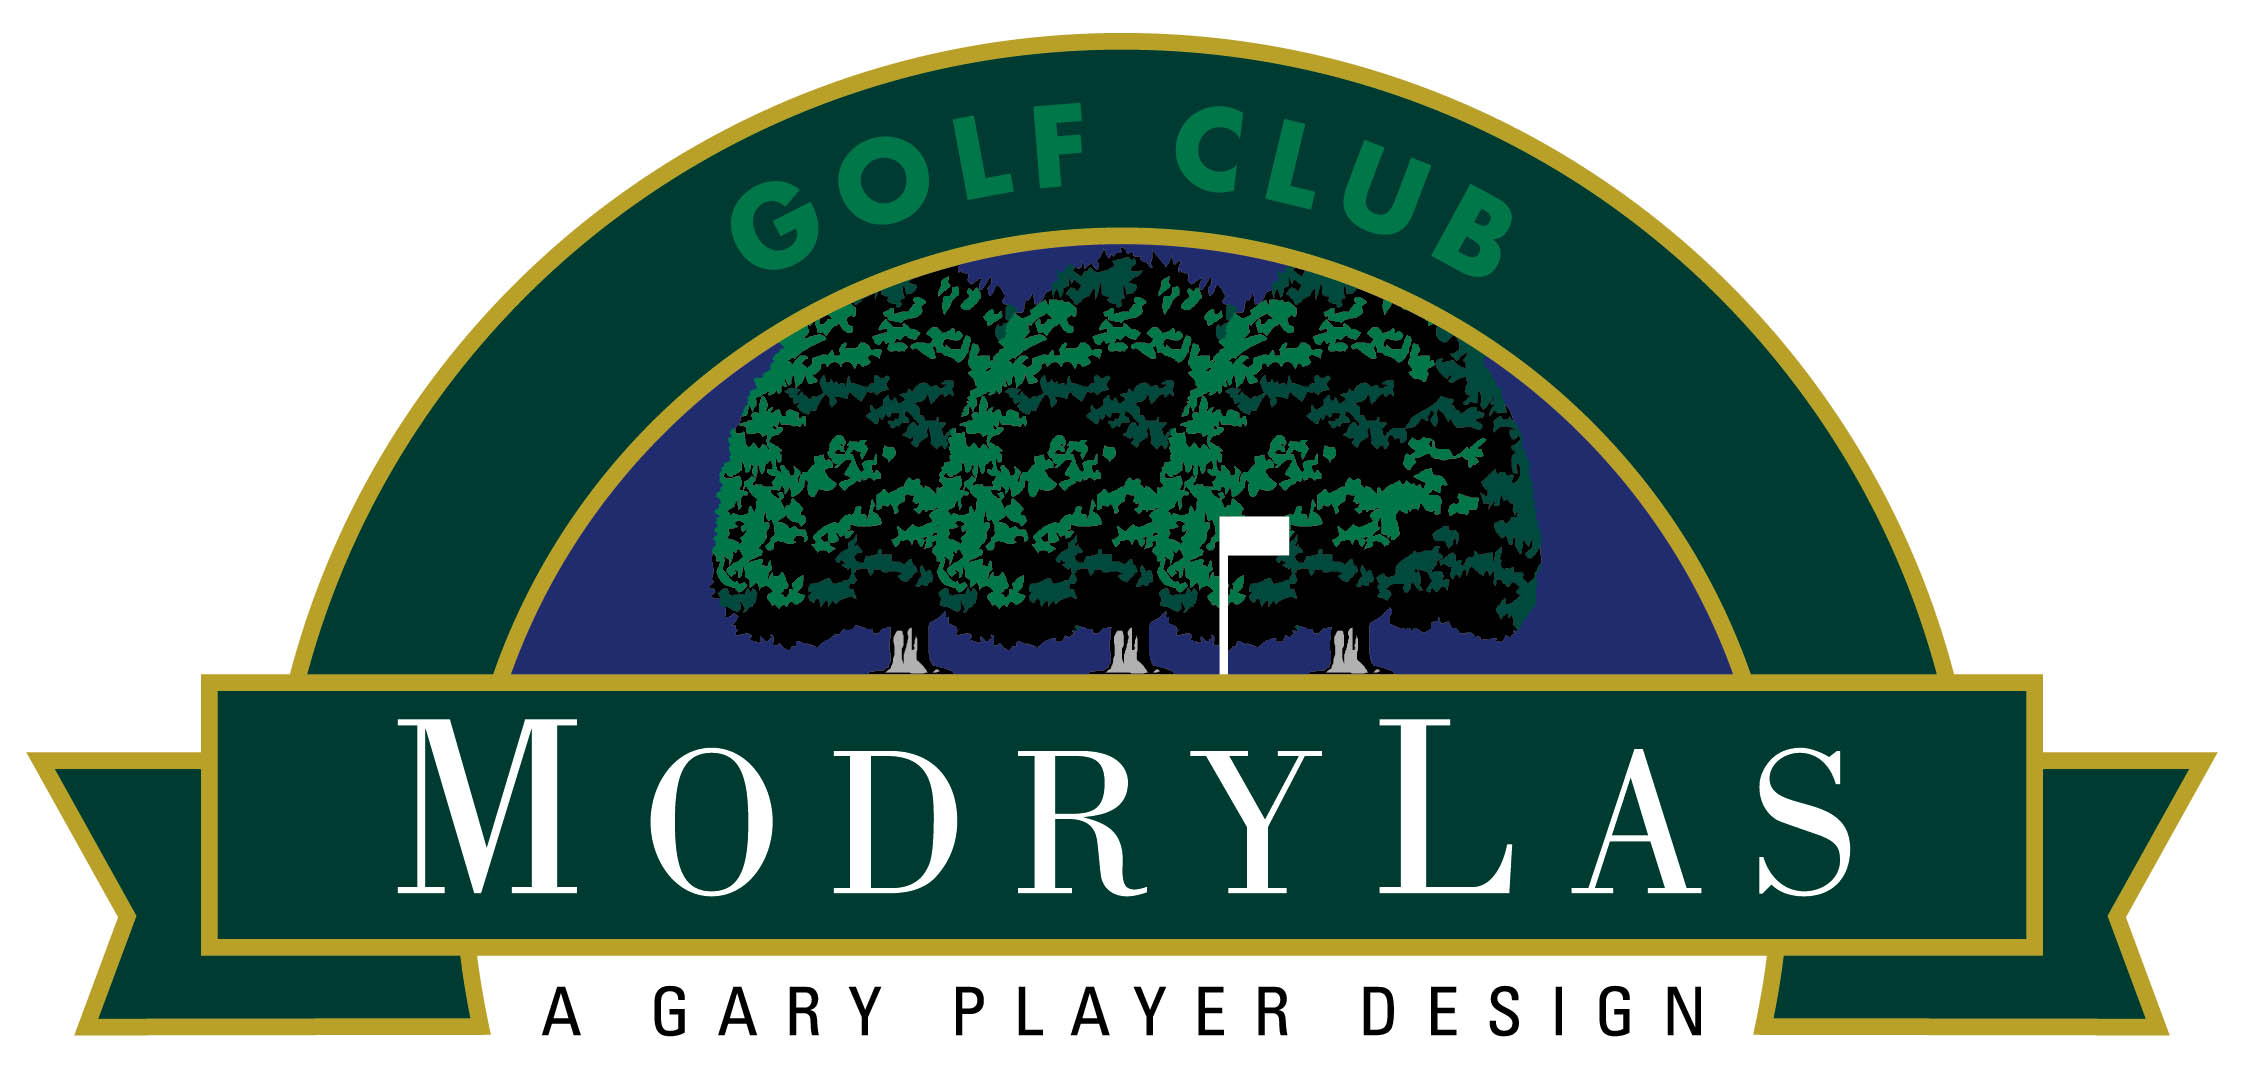 MODRY LAS Golf Club